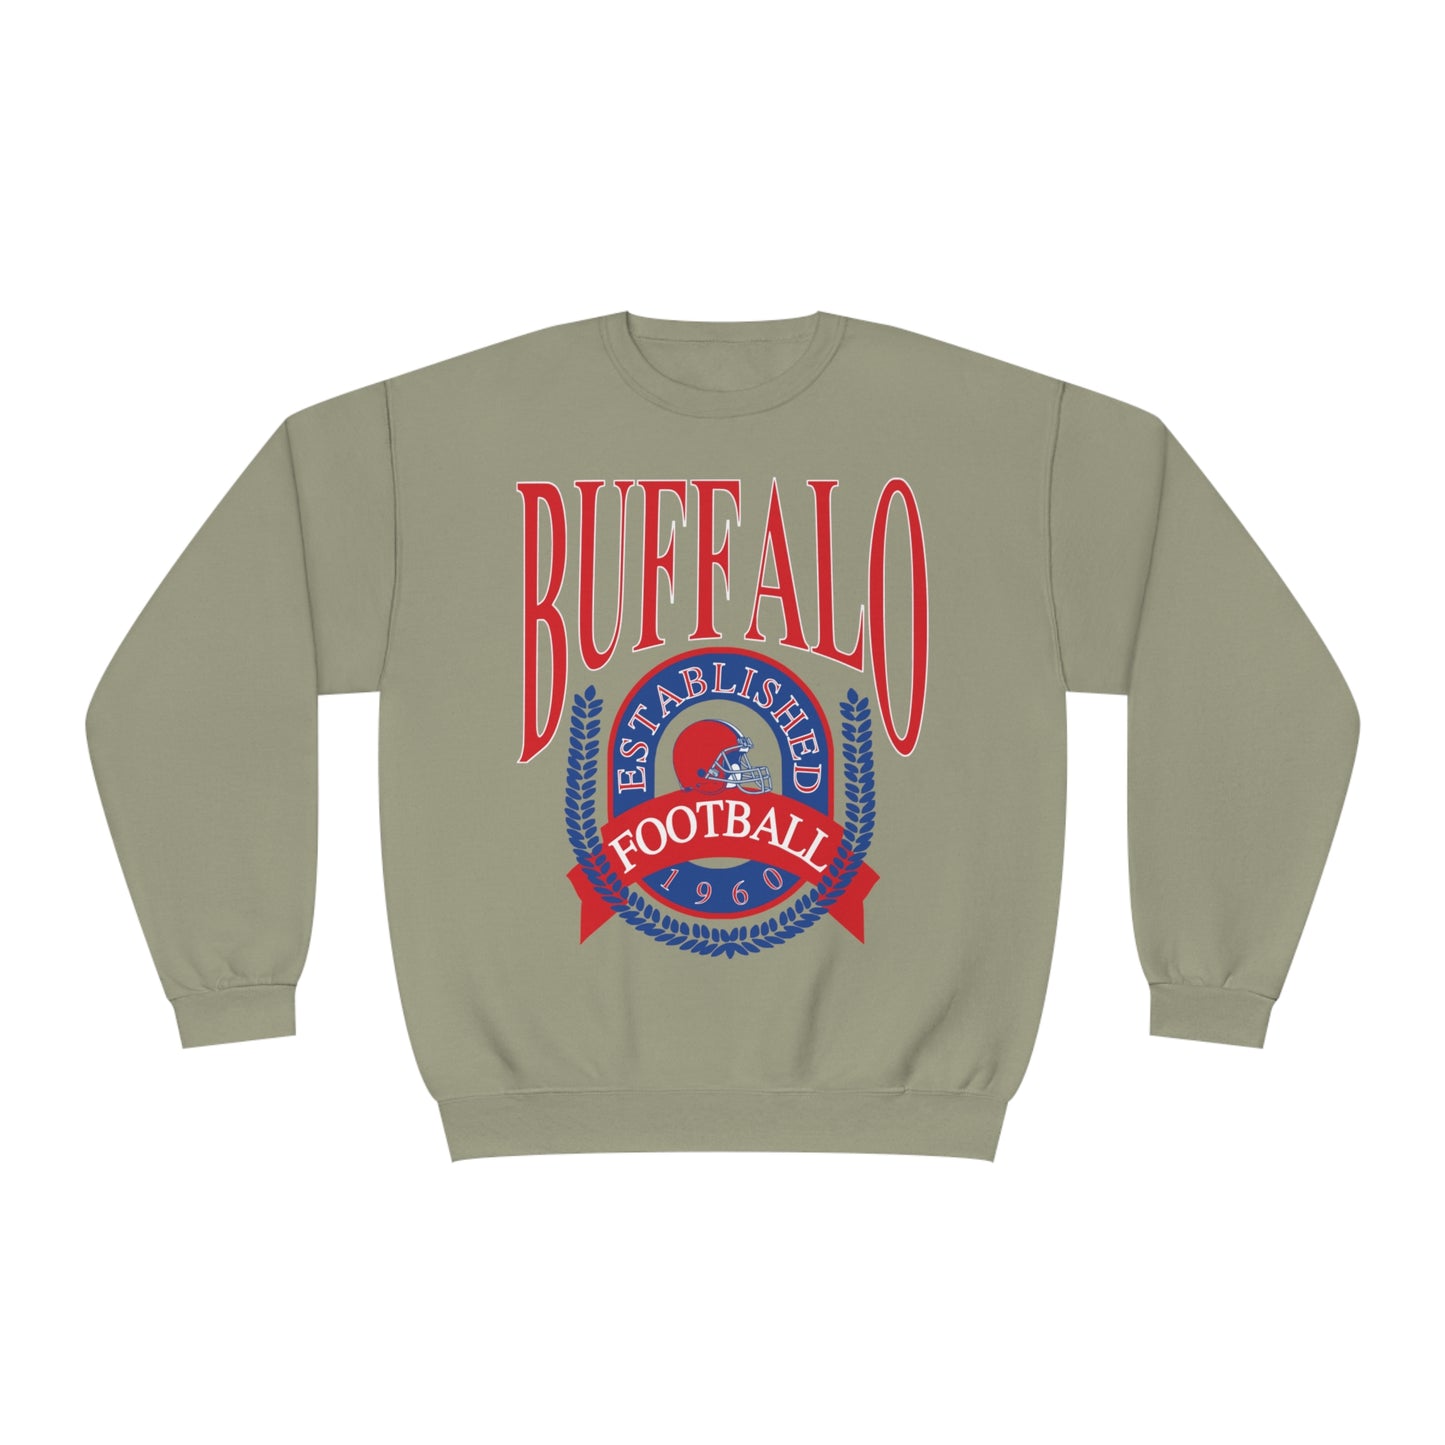 Vintage Buffalo Bills Crewneck Sweatshirt - Retro NFL Football Men's Women's Hoodie - Oversized Apparel - Design 1 Tan Beige Khaki